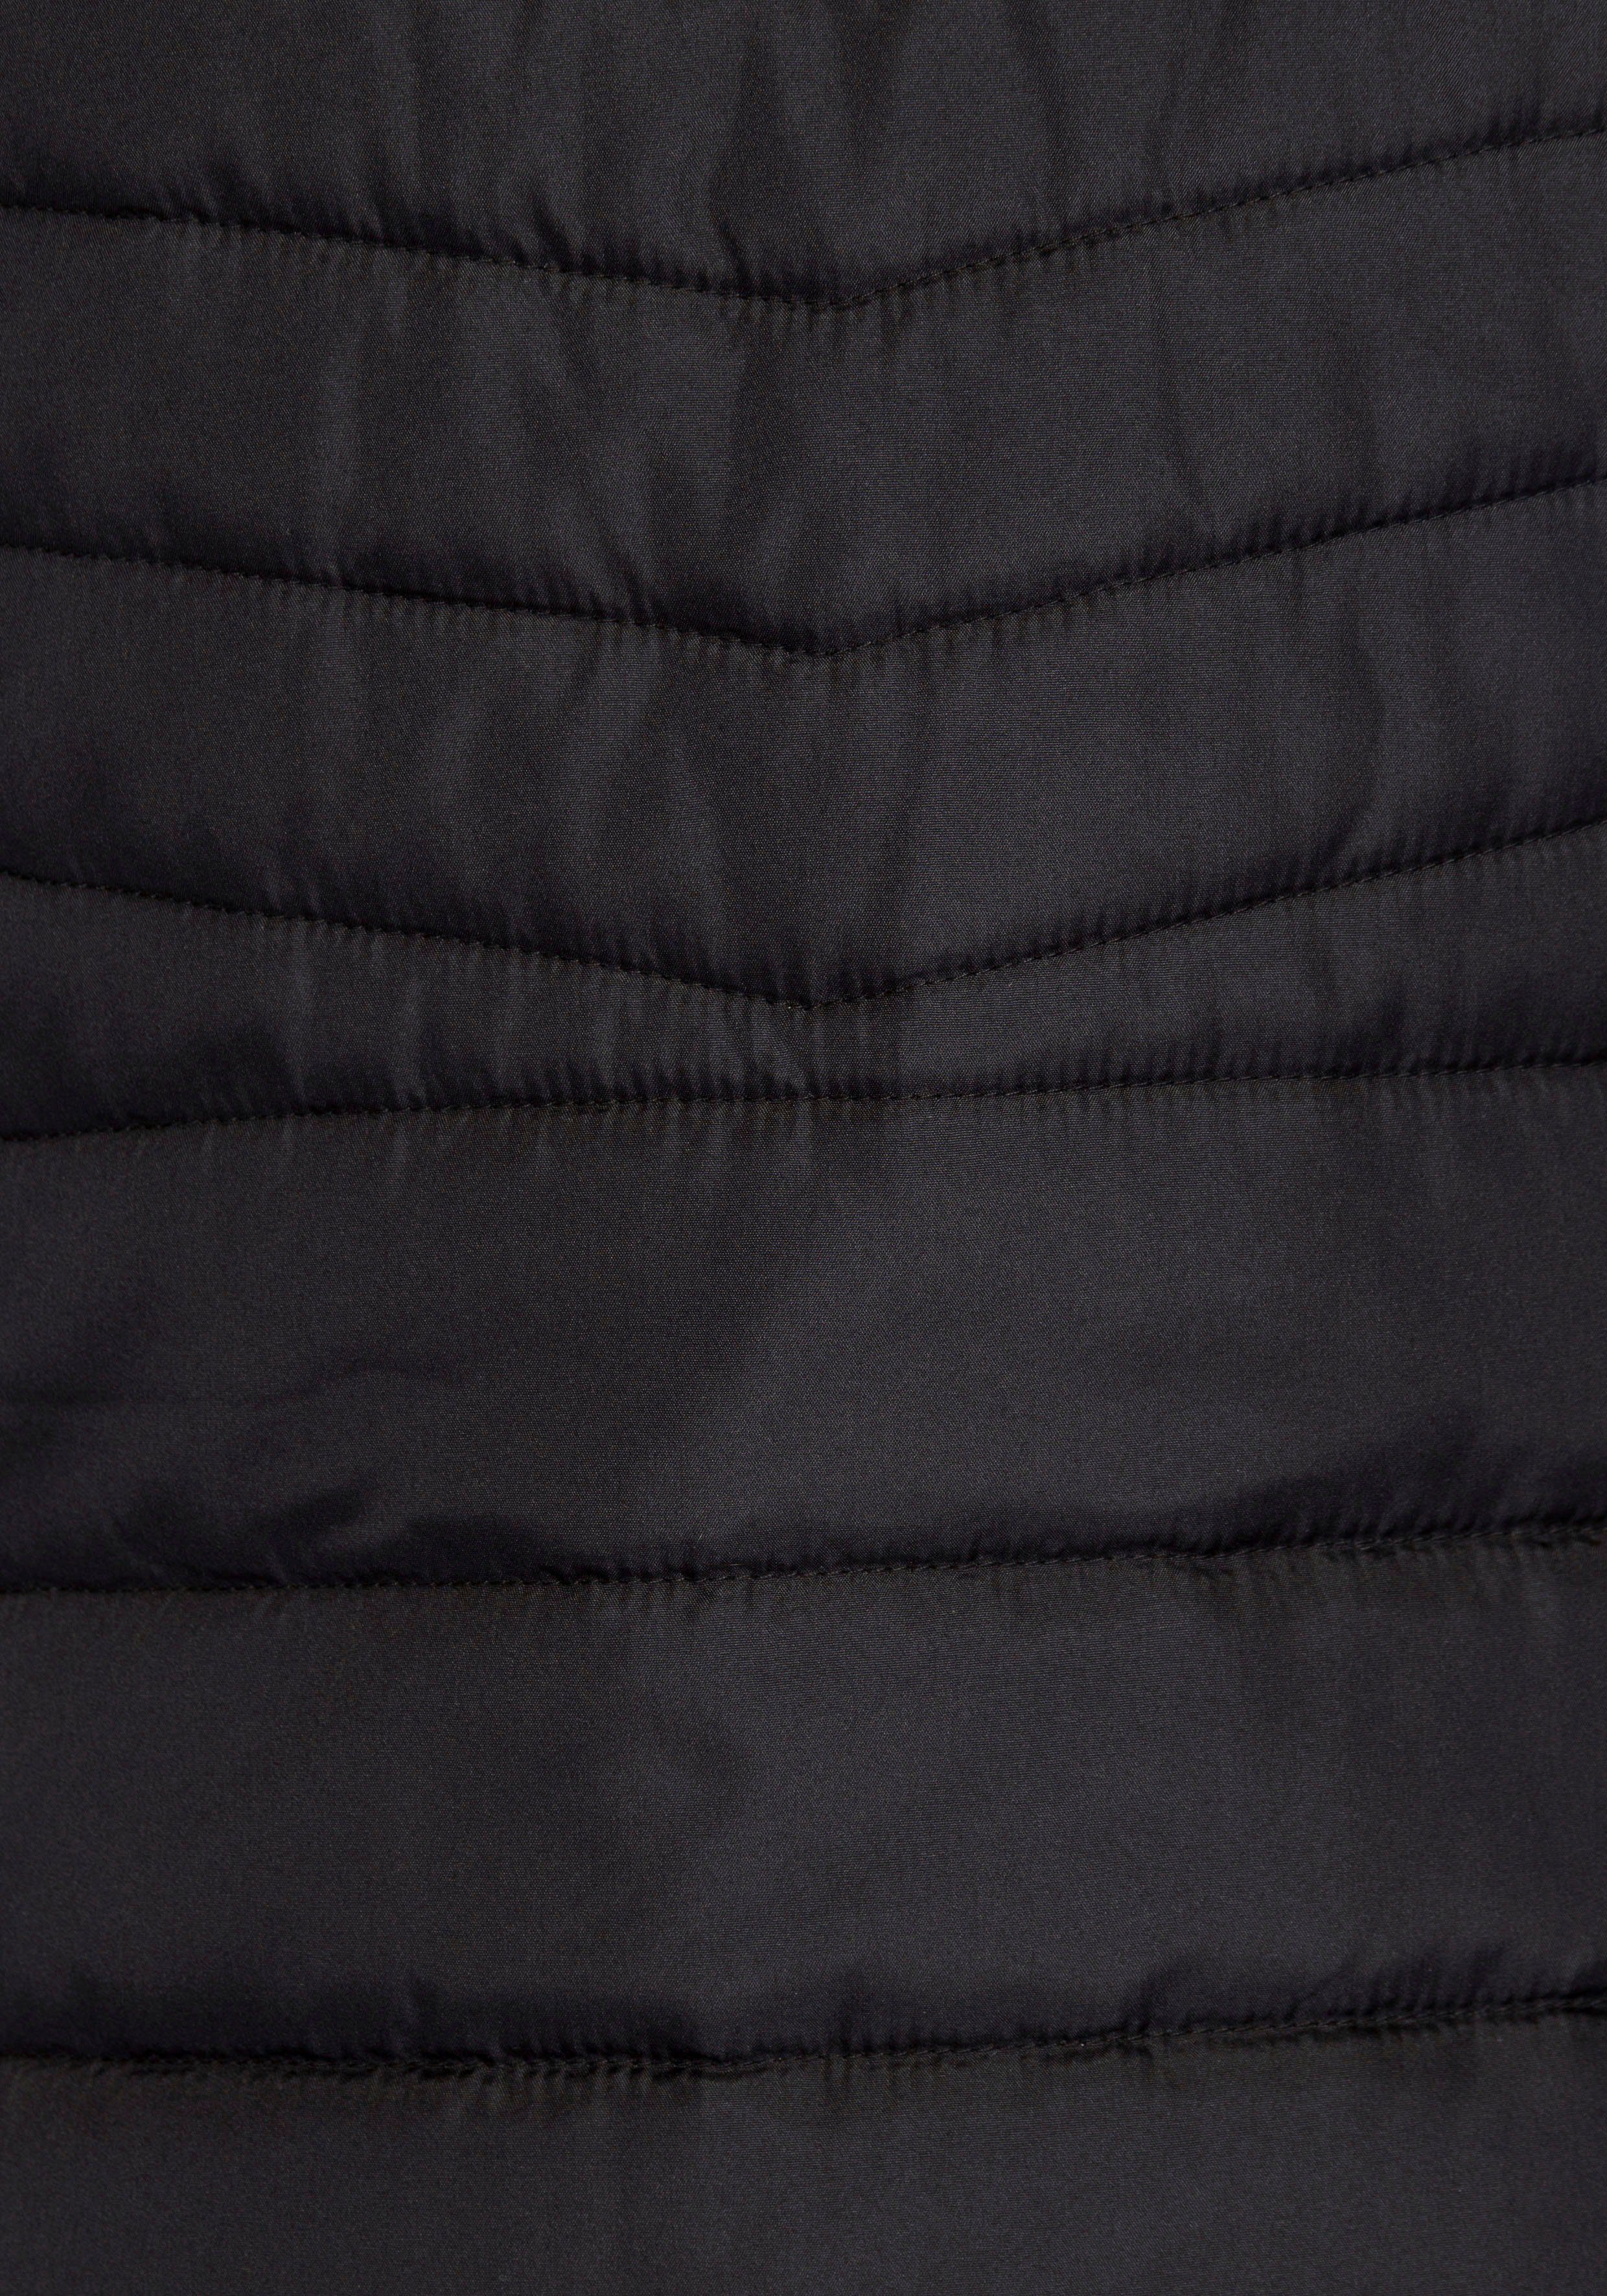 KangaROOS (Steppjacke nachhaltigem modischen schwarz Material) im Materialmix Langjacke aus